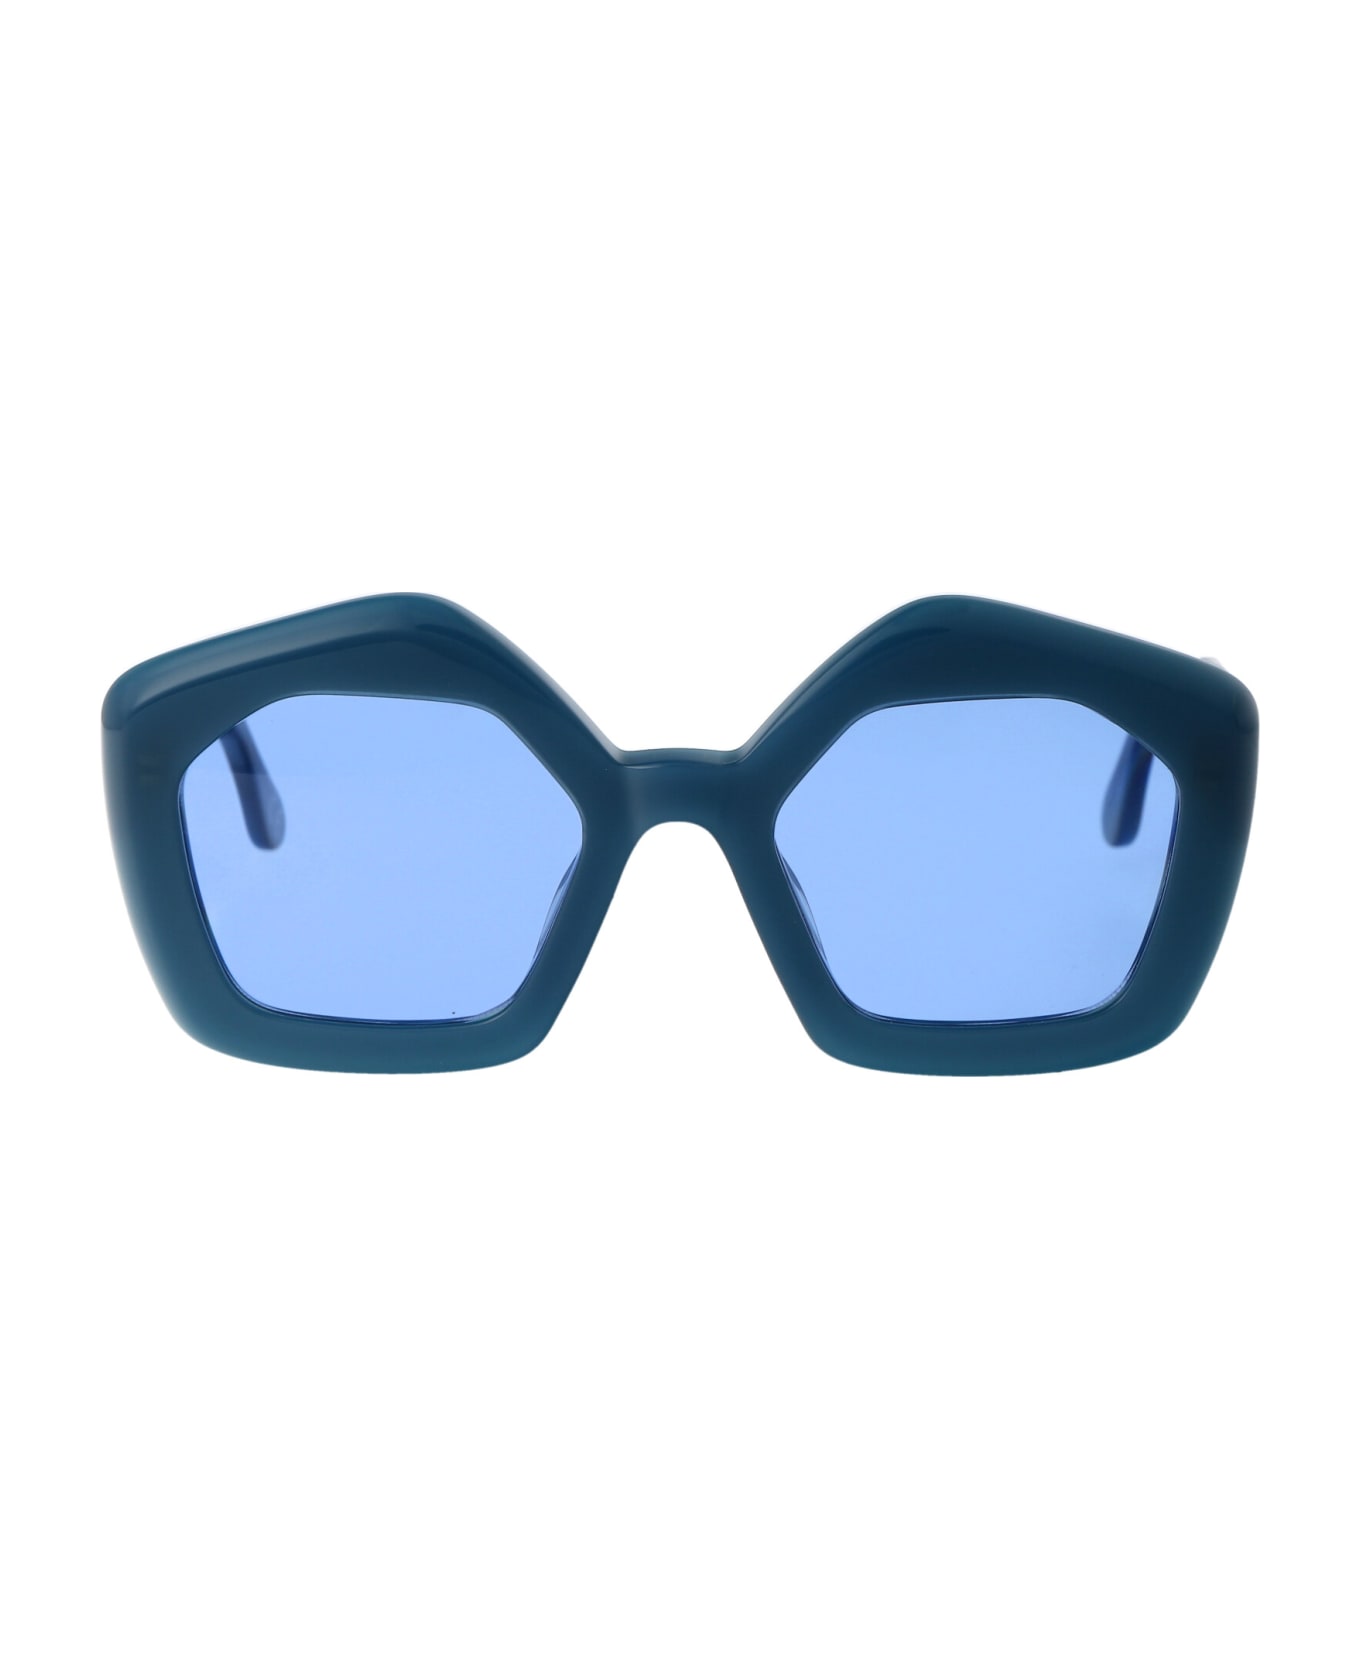 Marni Eyewear Laughing Waters Sunglasses - BLUE サングラス